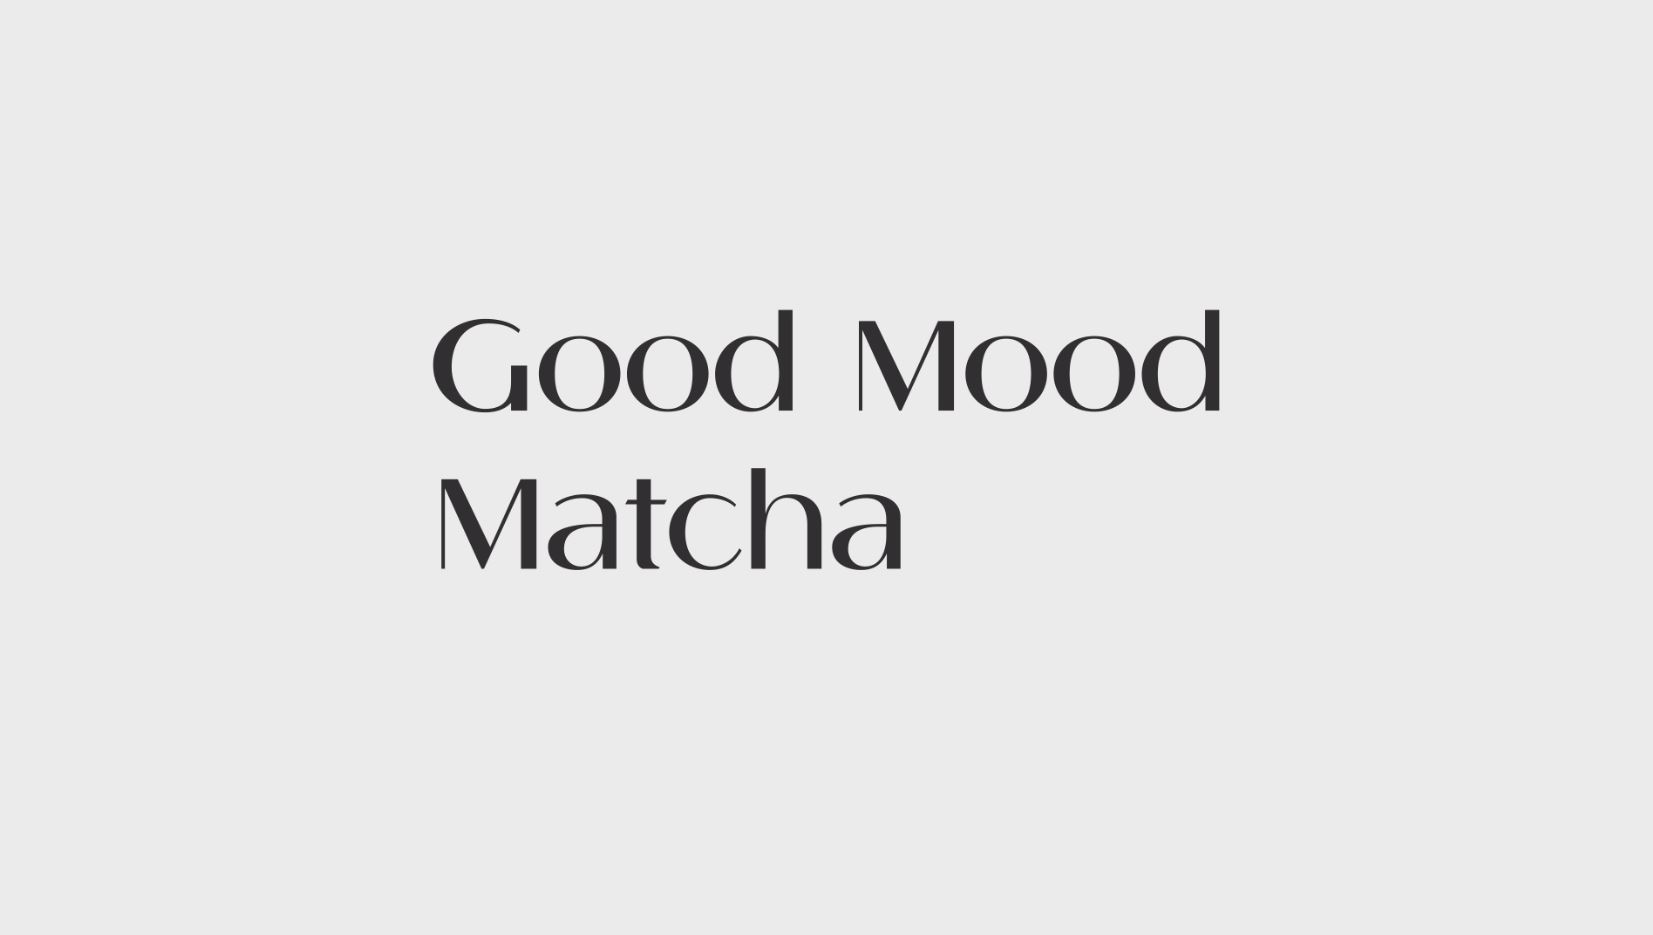 Good Mood Match抹茶品牌形象和包装设计